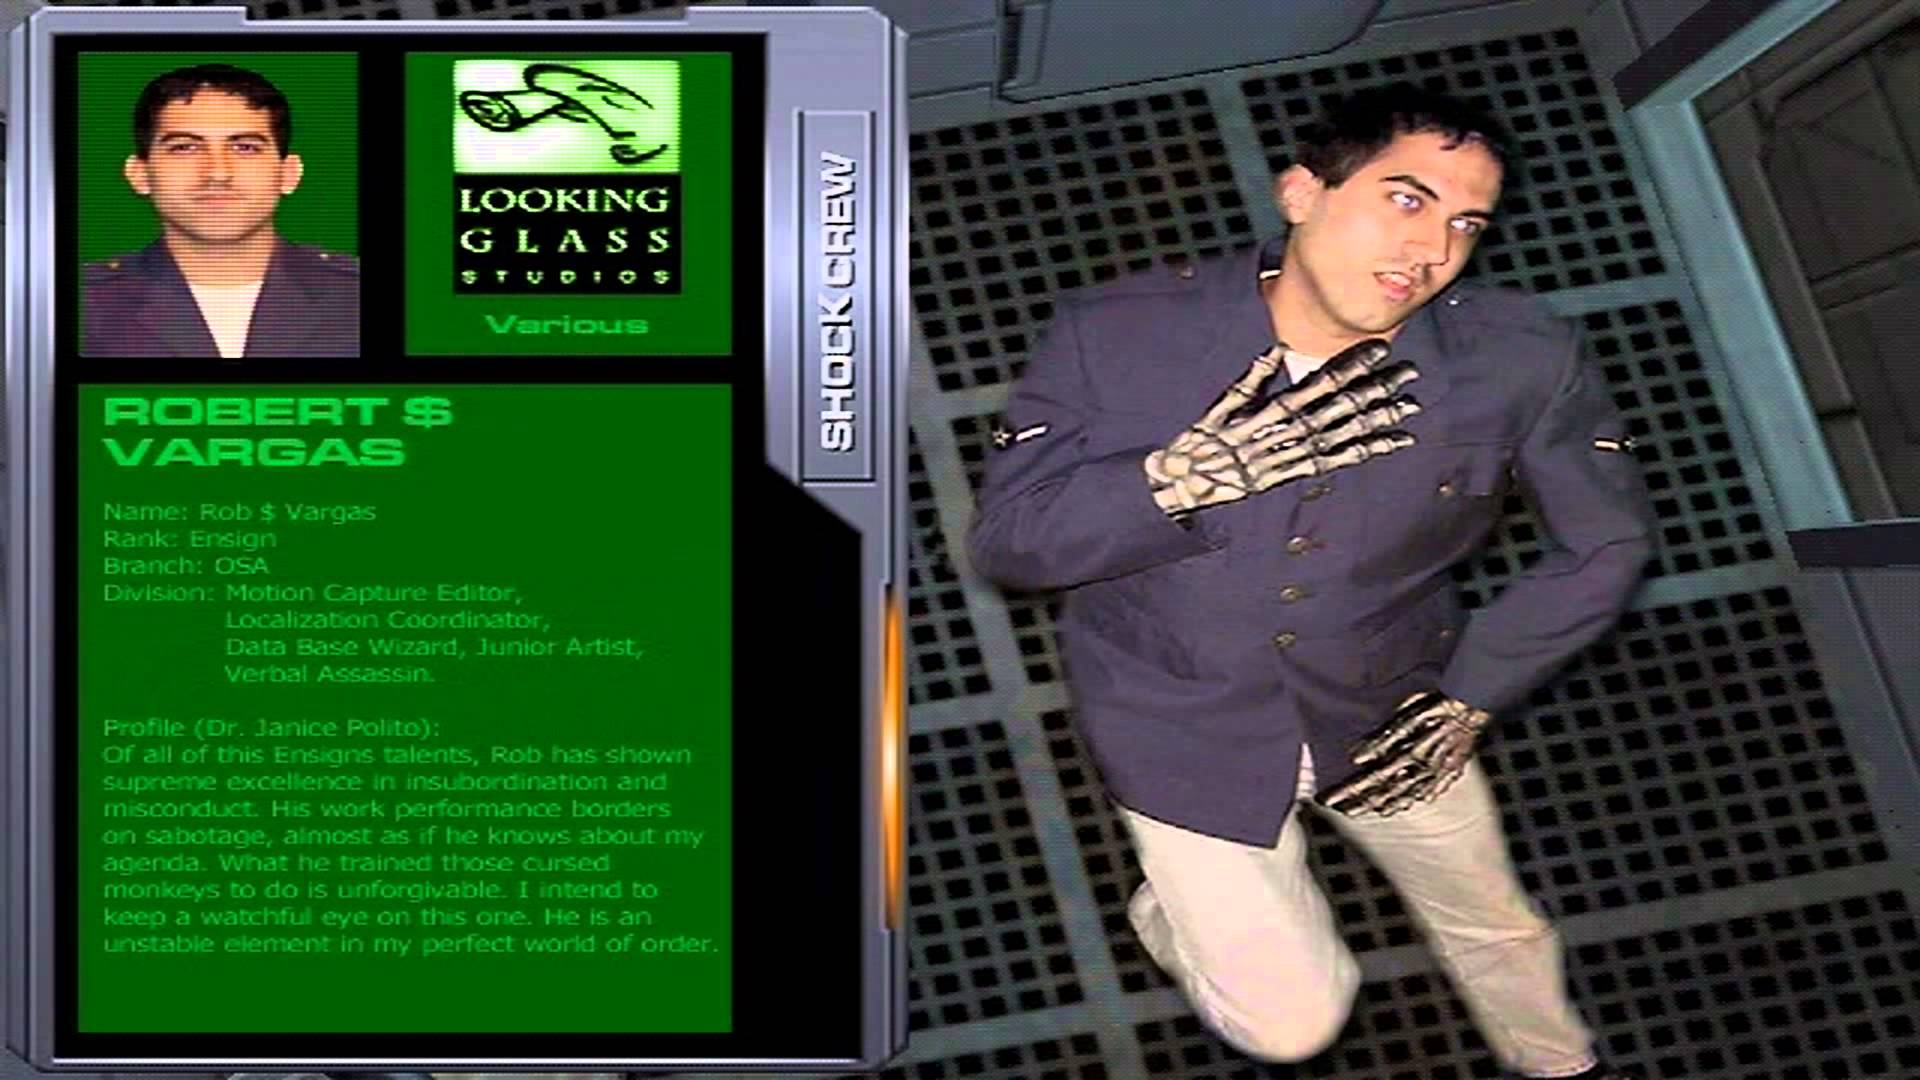 System Shock 2 CGI Credits in HD! - YouTube